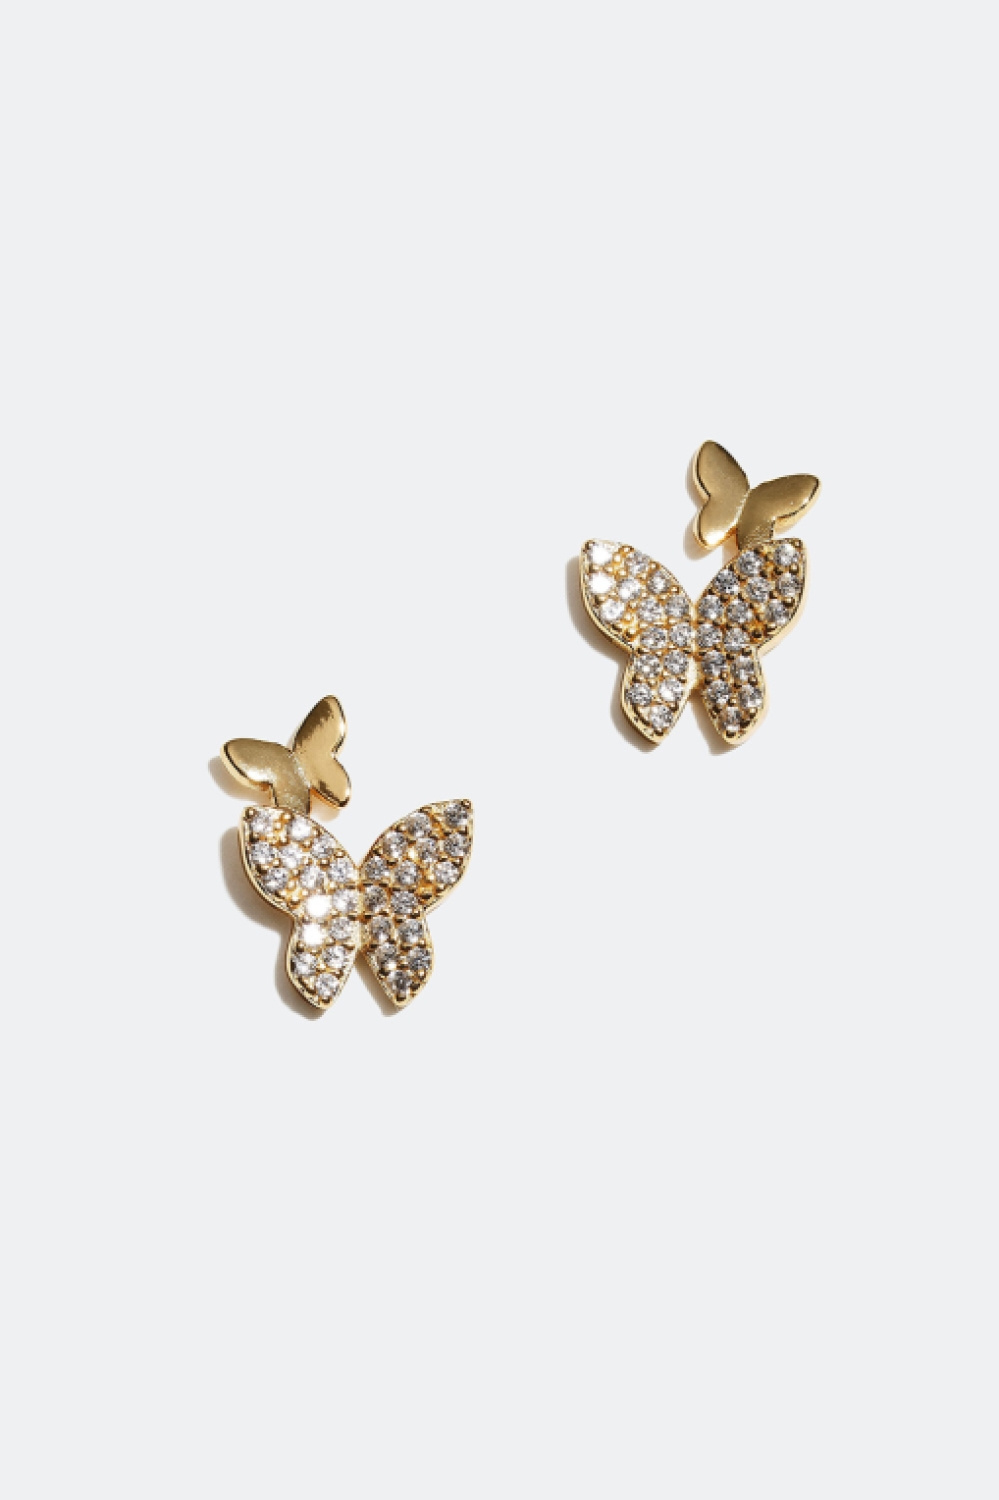 Øreringe med sommerfugle og kubisk zirkonia, forgyldt med 18 kt. guld